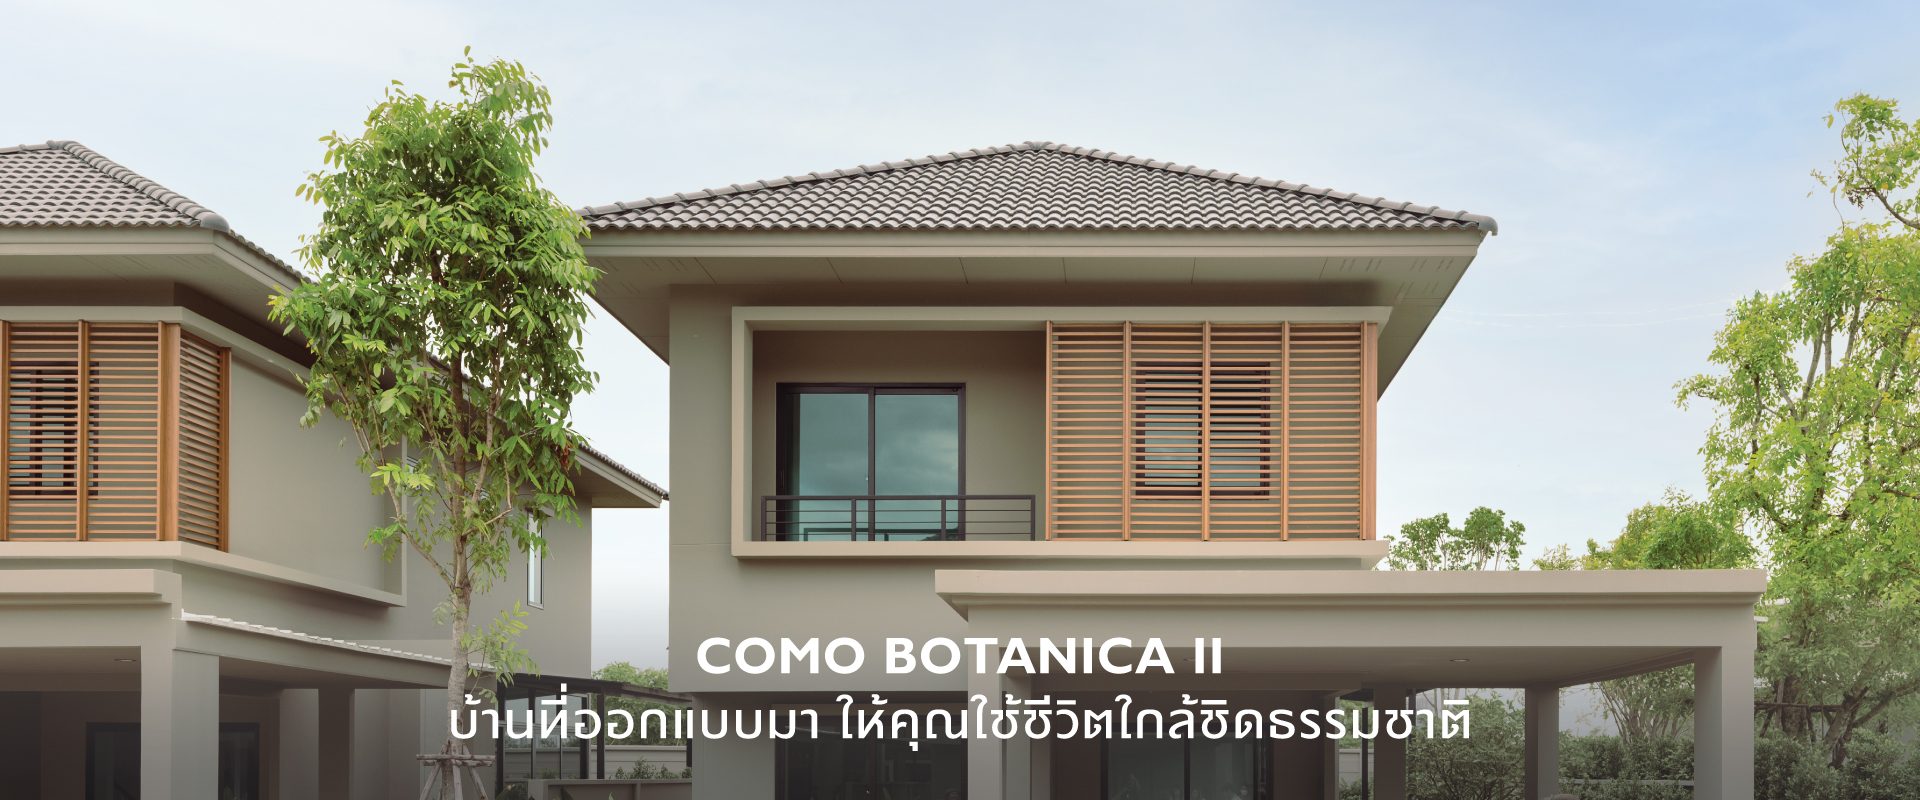 COMO BOTANICA II บ้านที่ออกแบบมา ให้คุณใช้ชีวิตใกล้ชิดธรรมชาติ